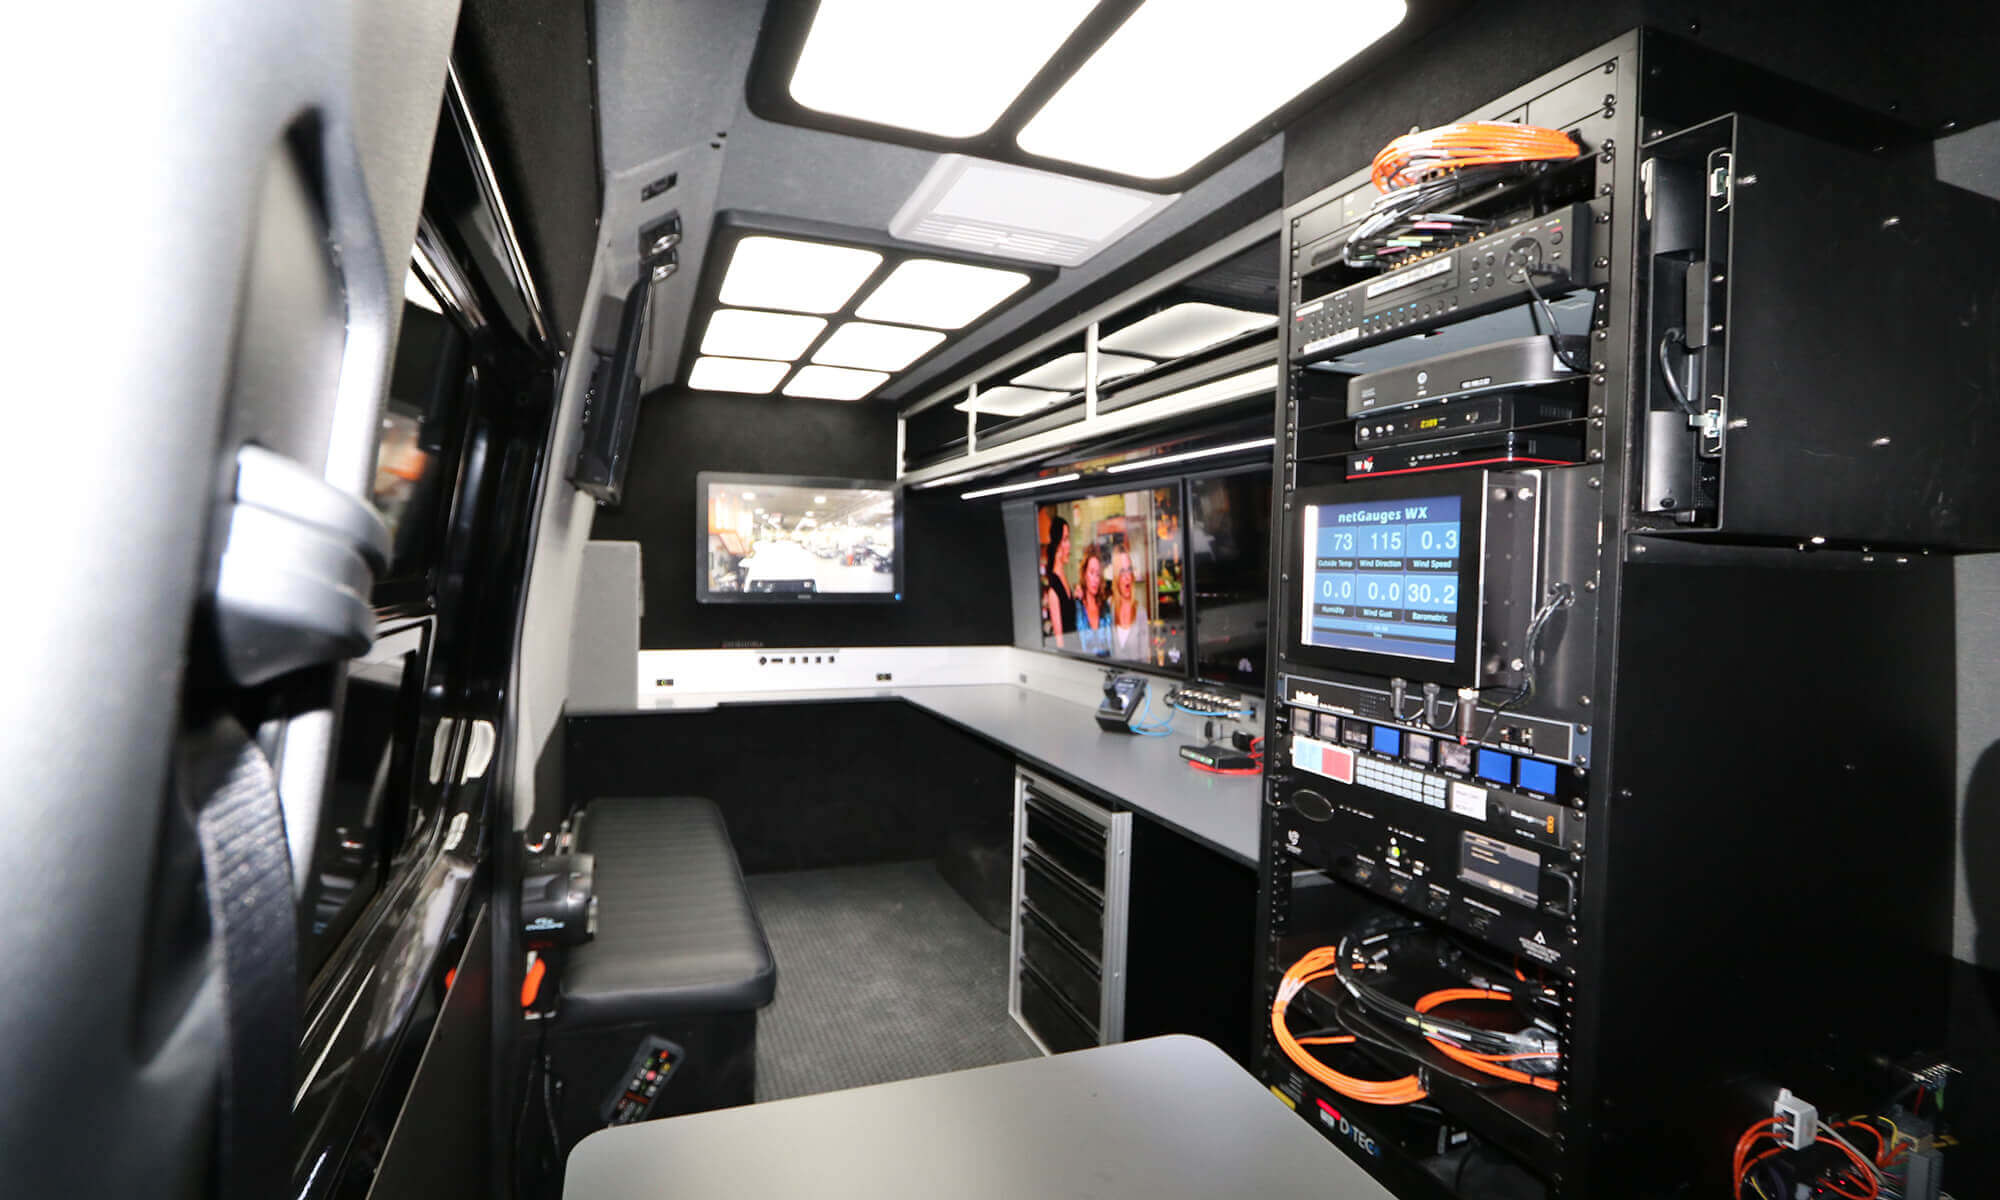 Mobile Command Vans - Interior Seating Displays and Racks